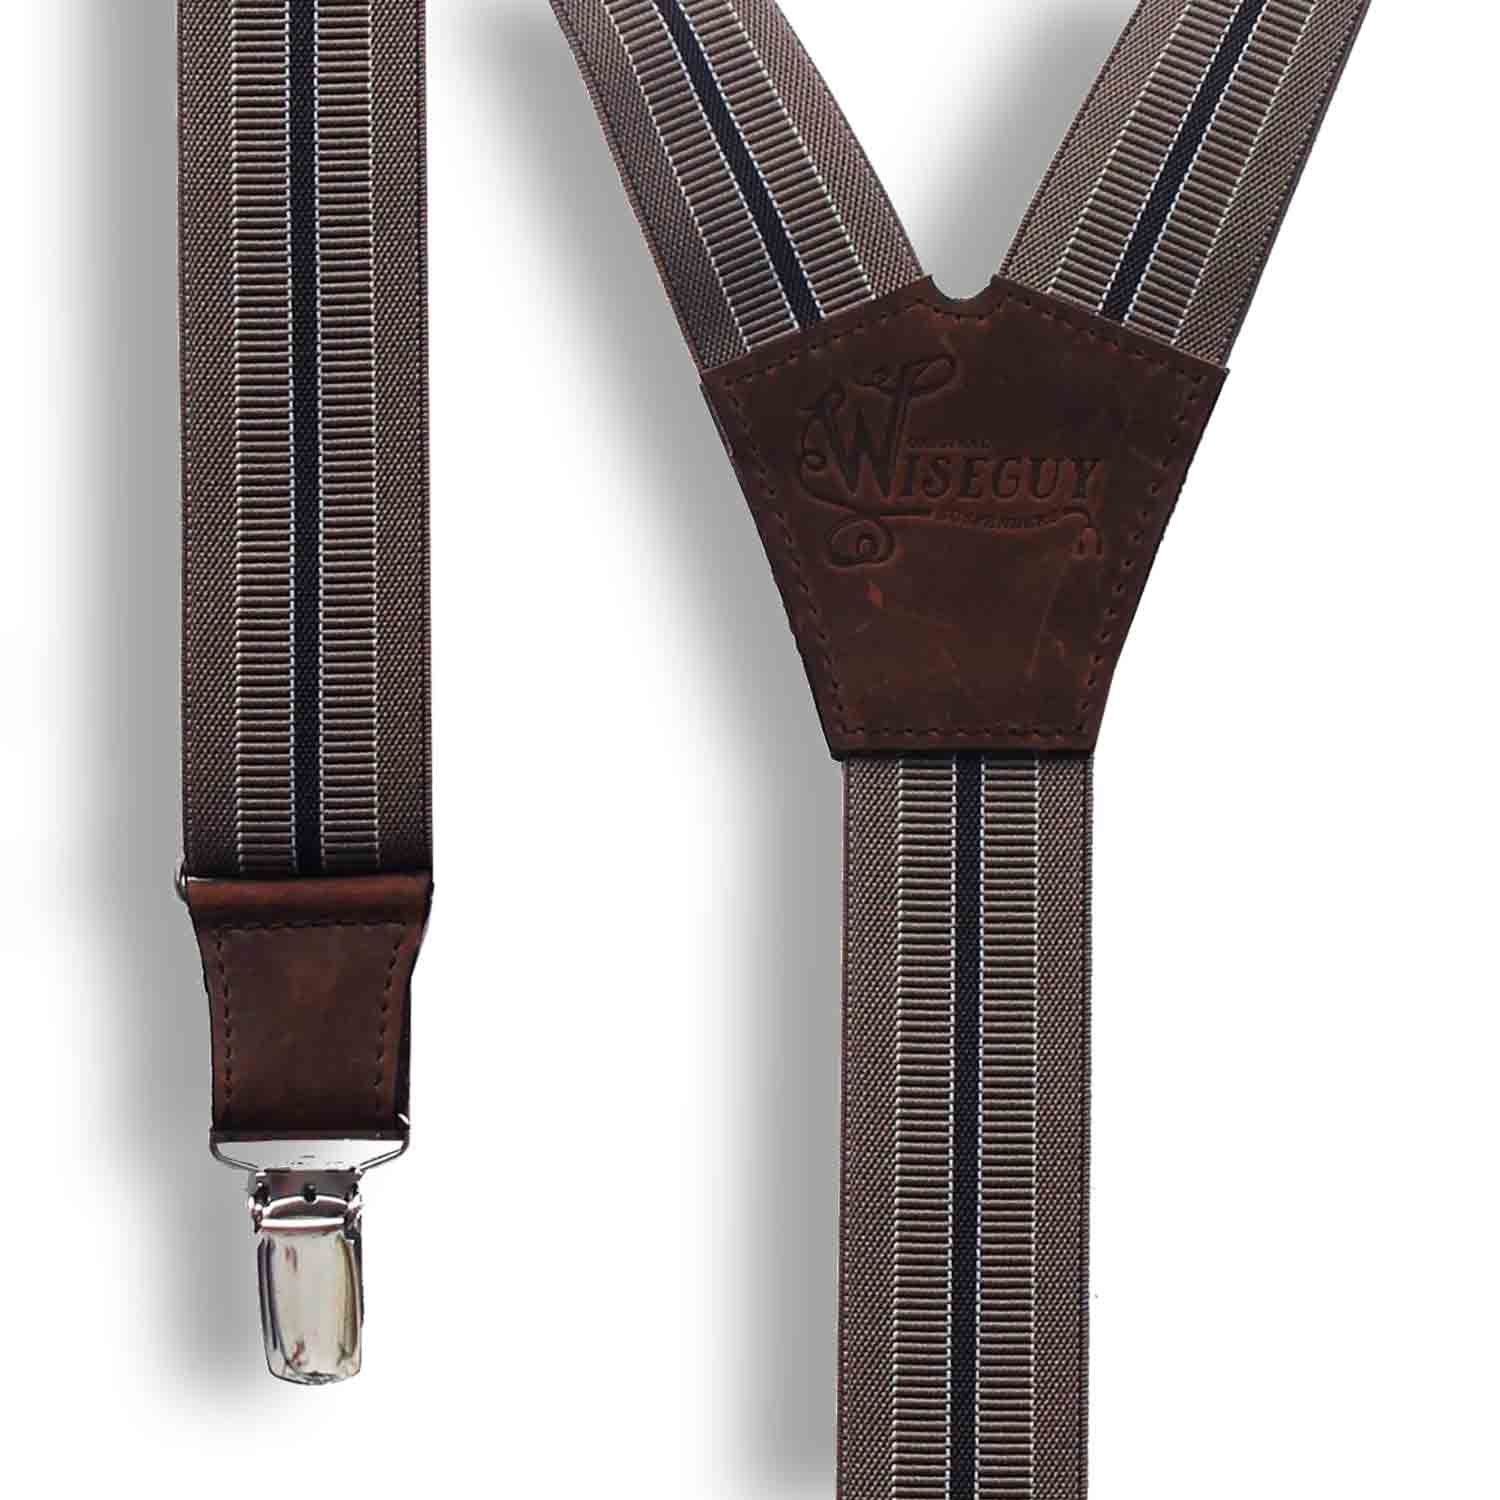 The Doctor Coffee Brown striped men's Suspenders 1.3 inch - Wiseguy Suspenders